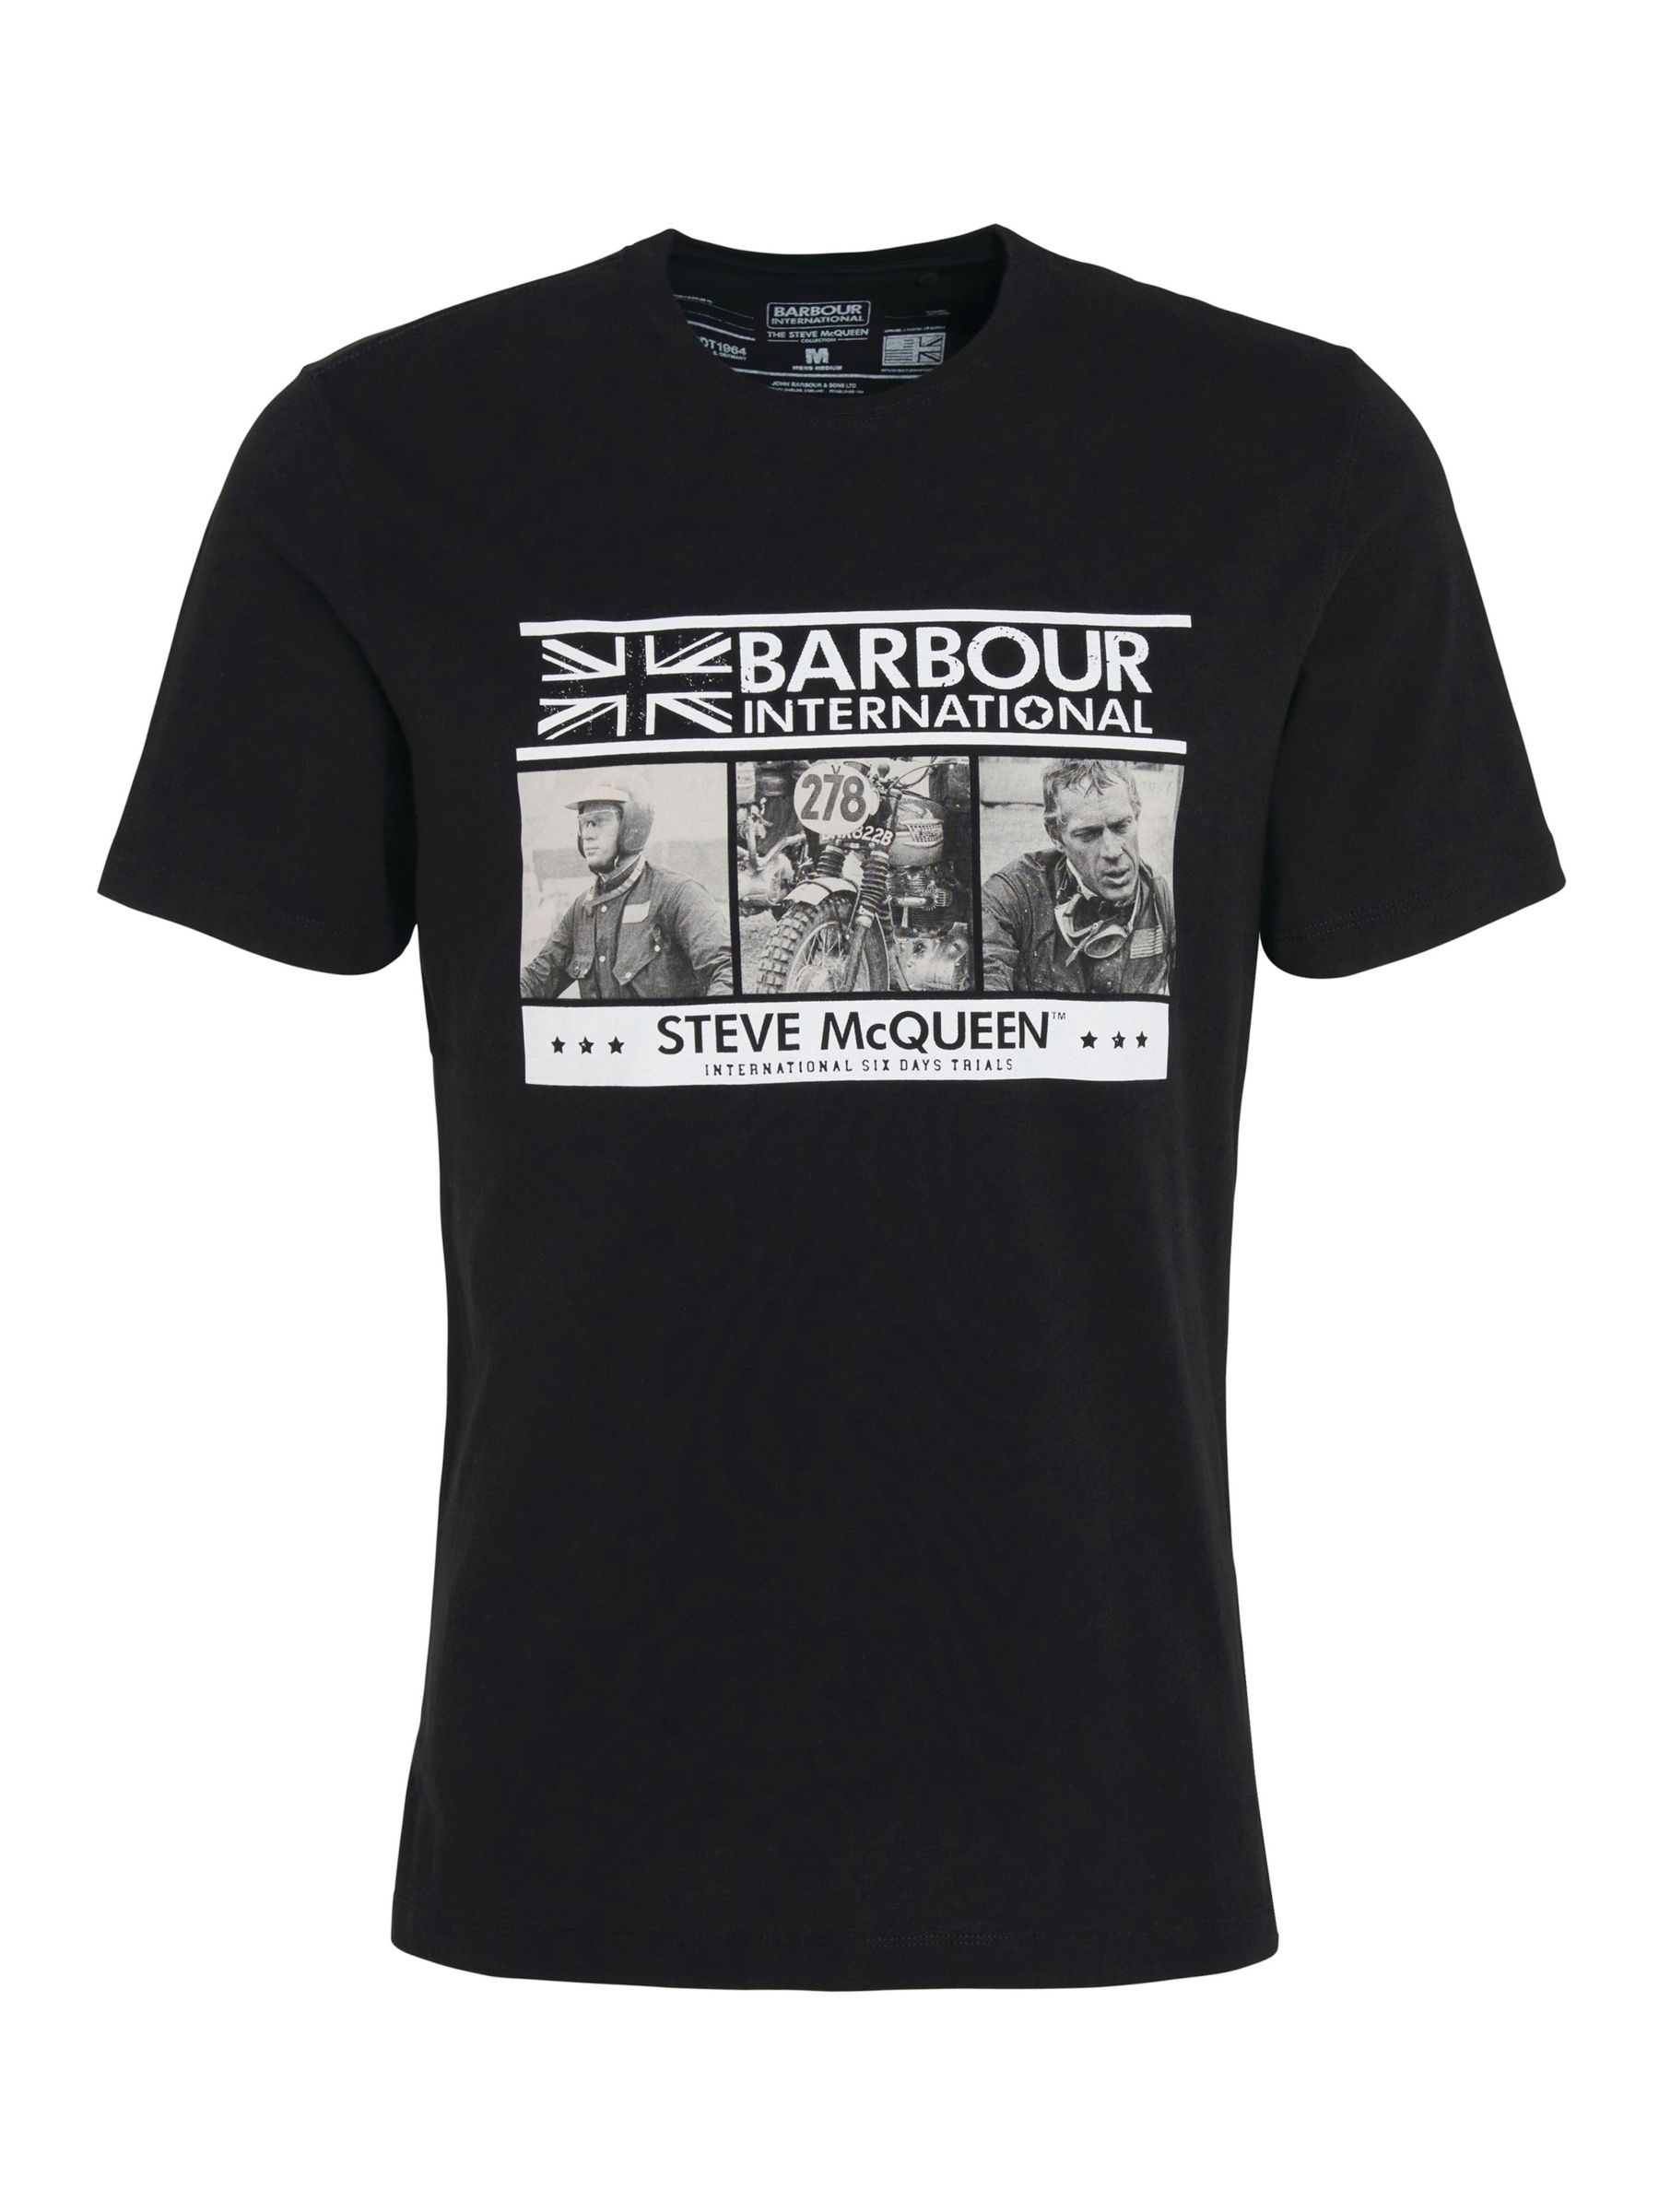 Buy Barbour International Charge Steve McQueen T-Shirt Online at johnlewis.com